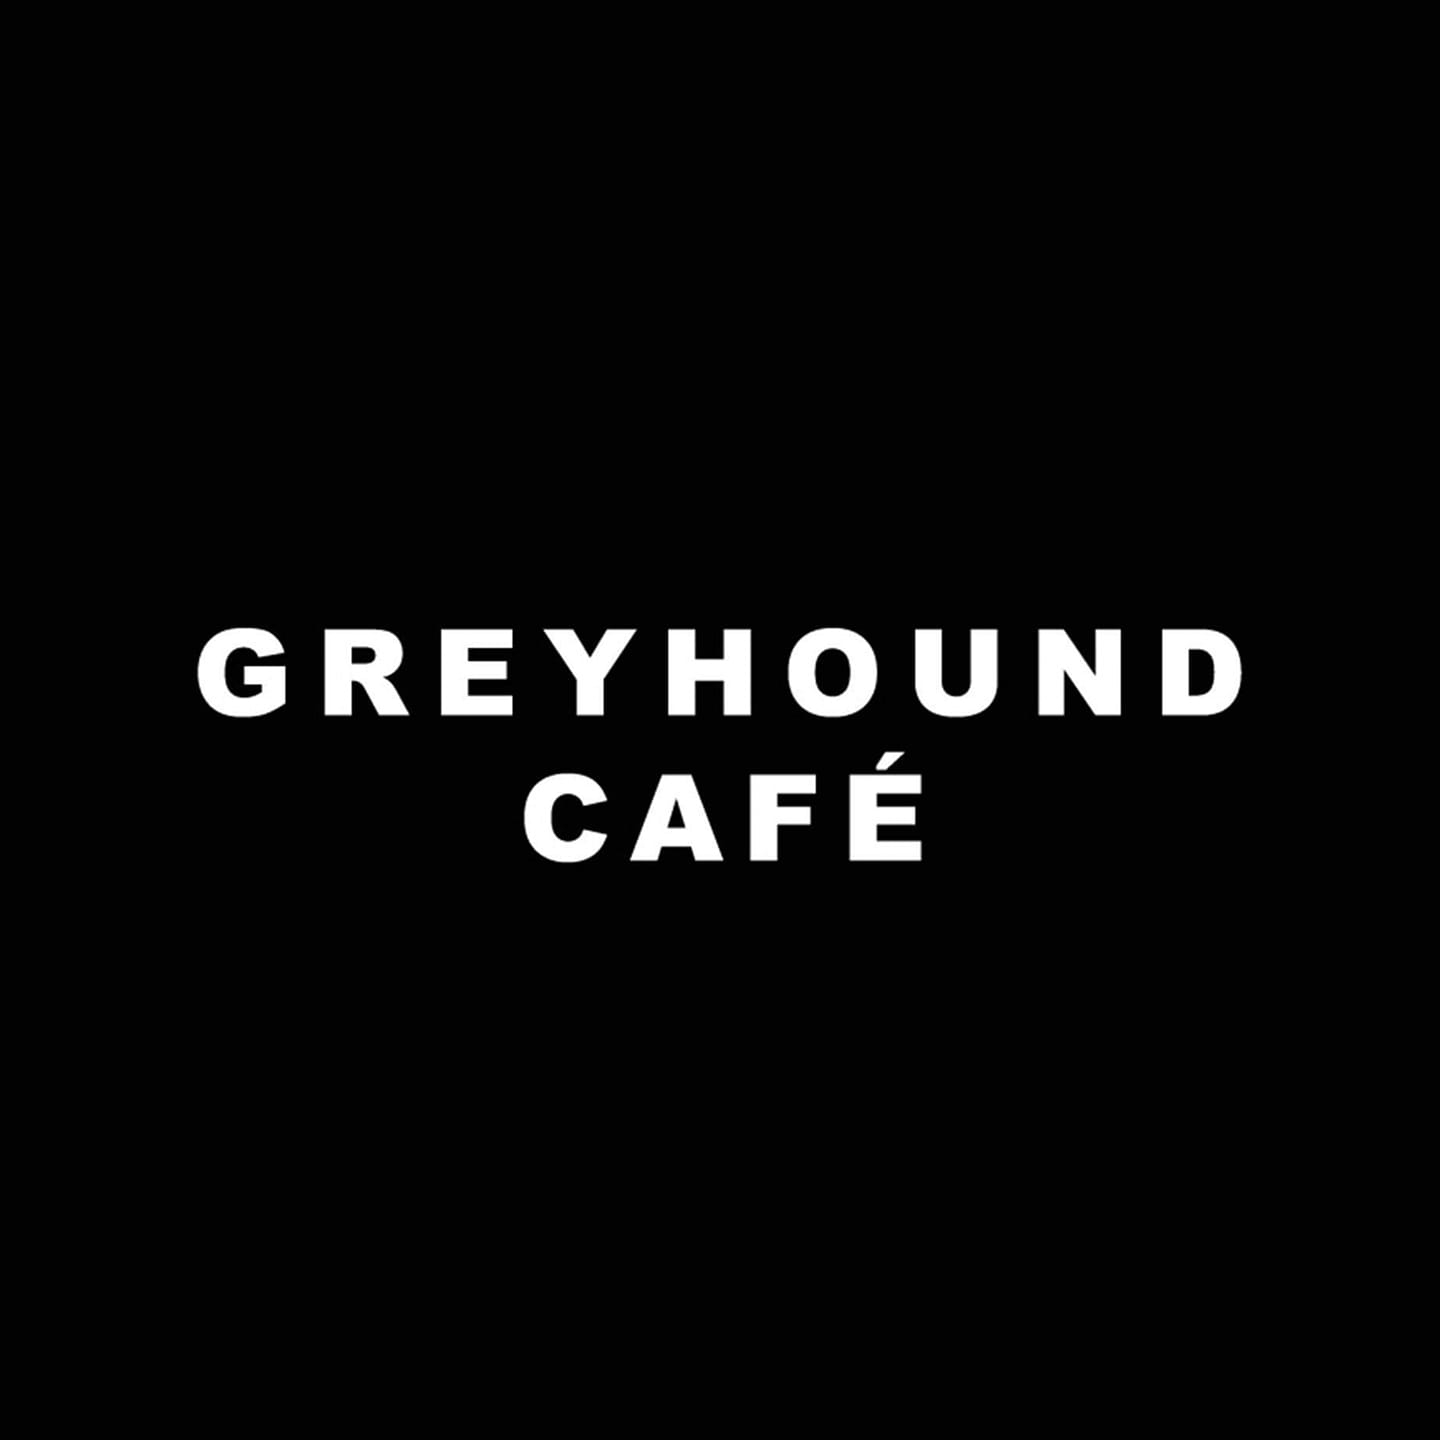 GREYHOUND CAFE